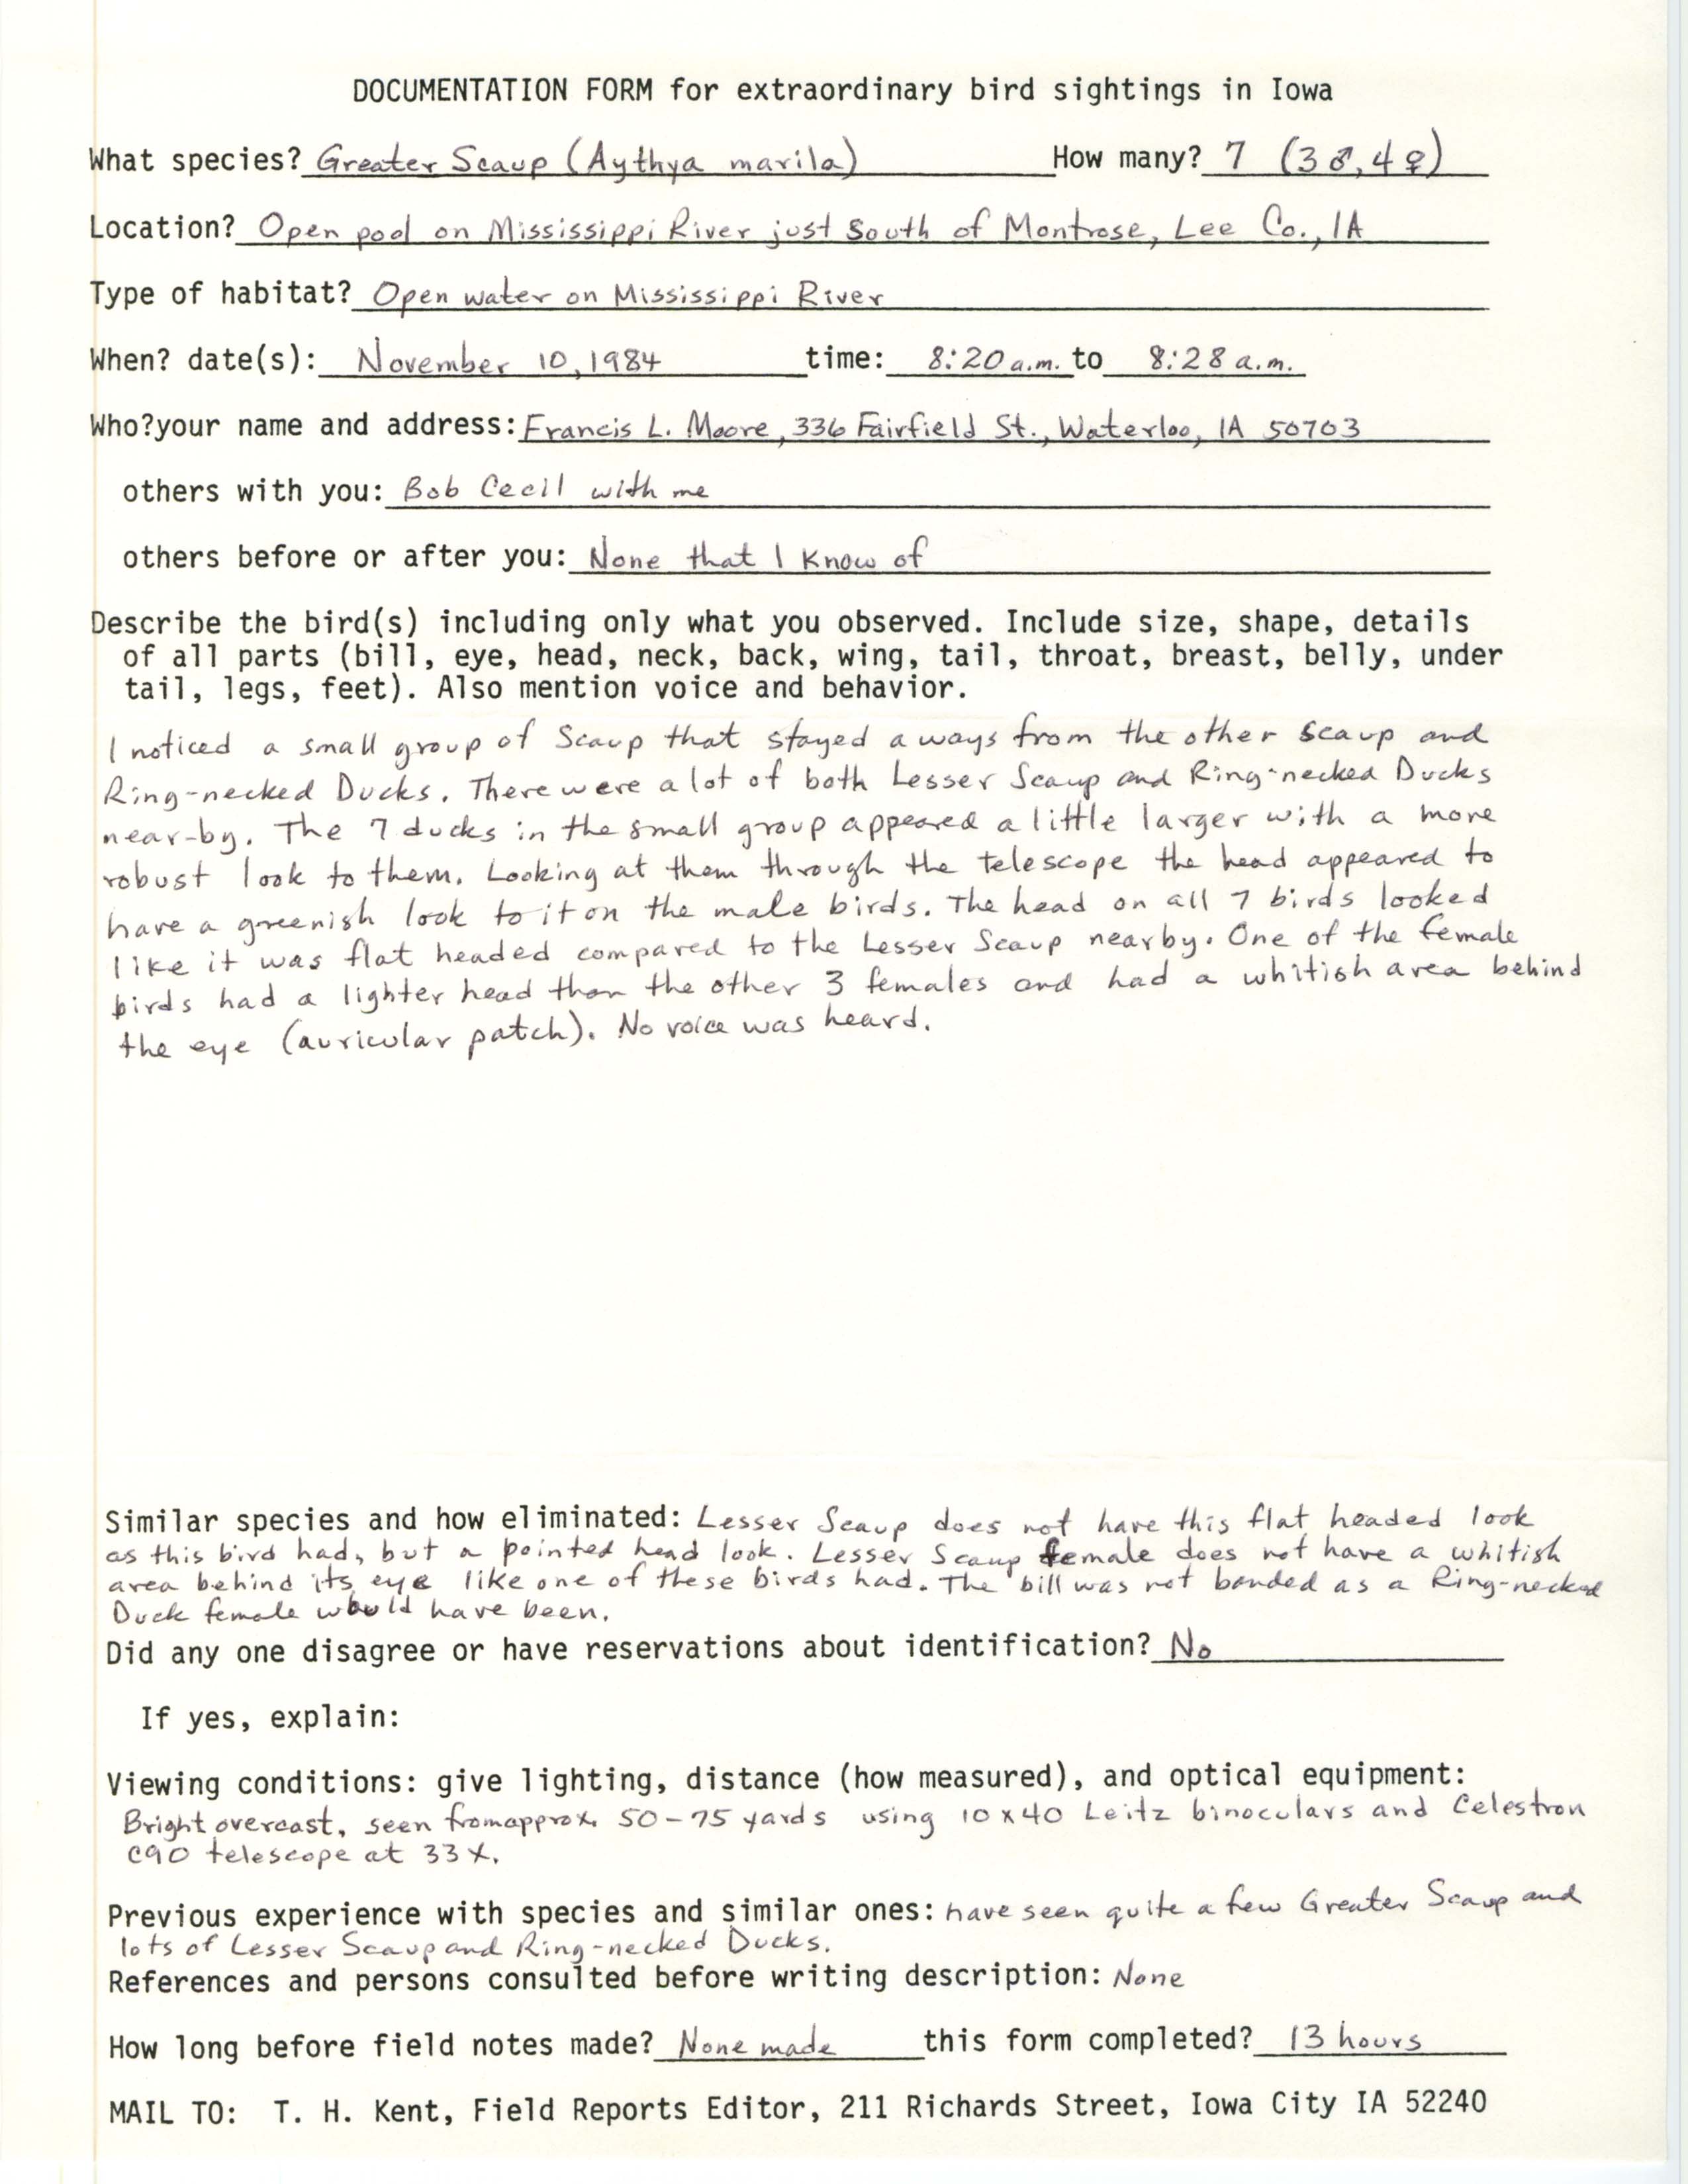 Rare bird documentation form for Greater Scaup near Montrose, 1984